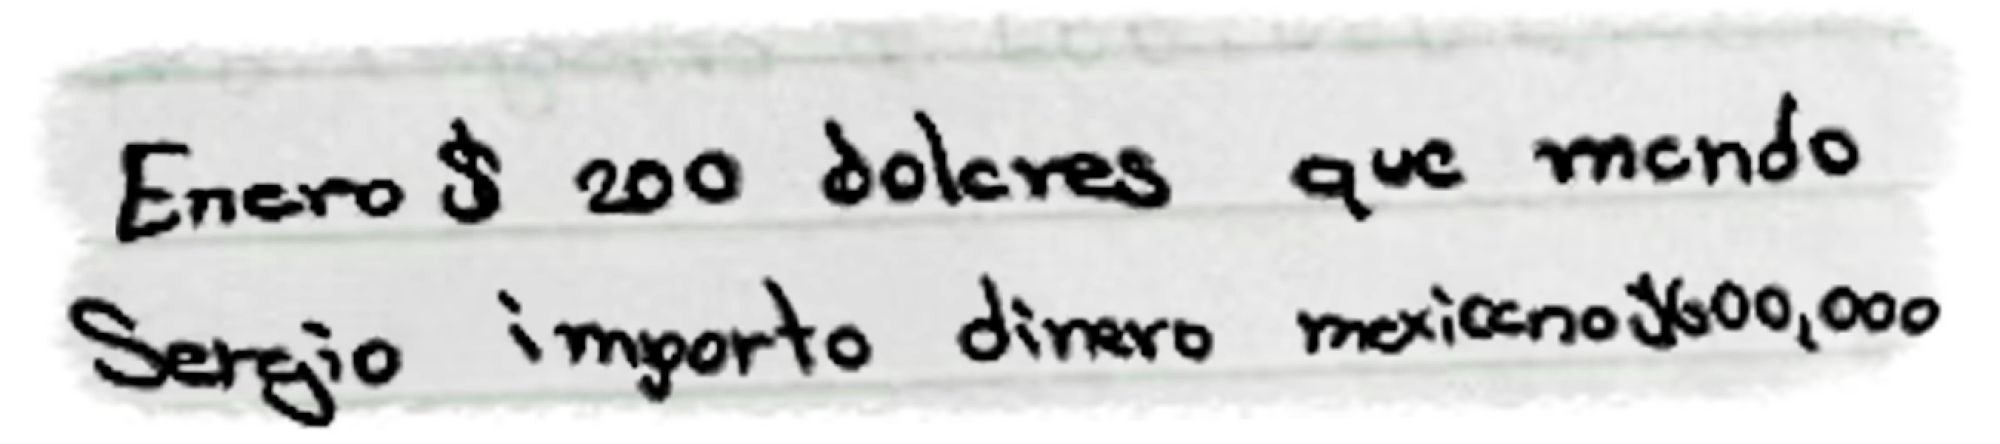 Handwritten notes in Spanish. "$200 dolares que mando Sergio importo dinero mexicano $600,000"